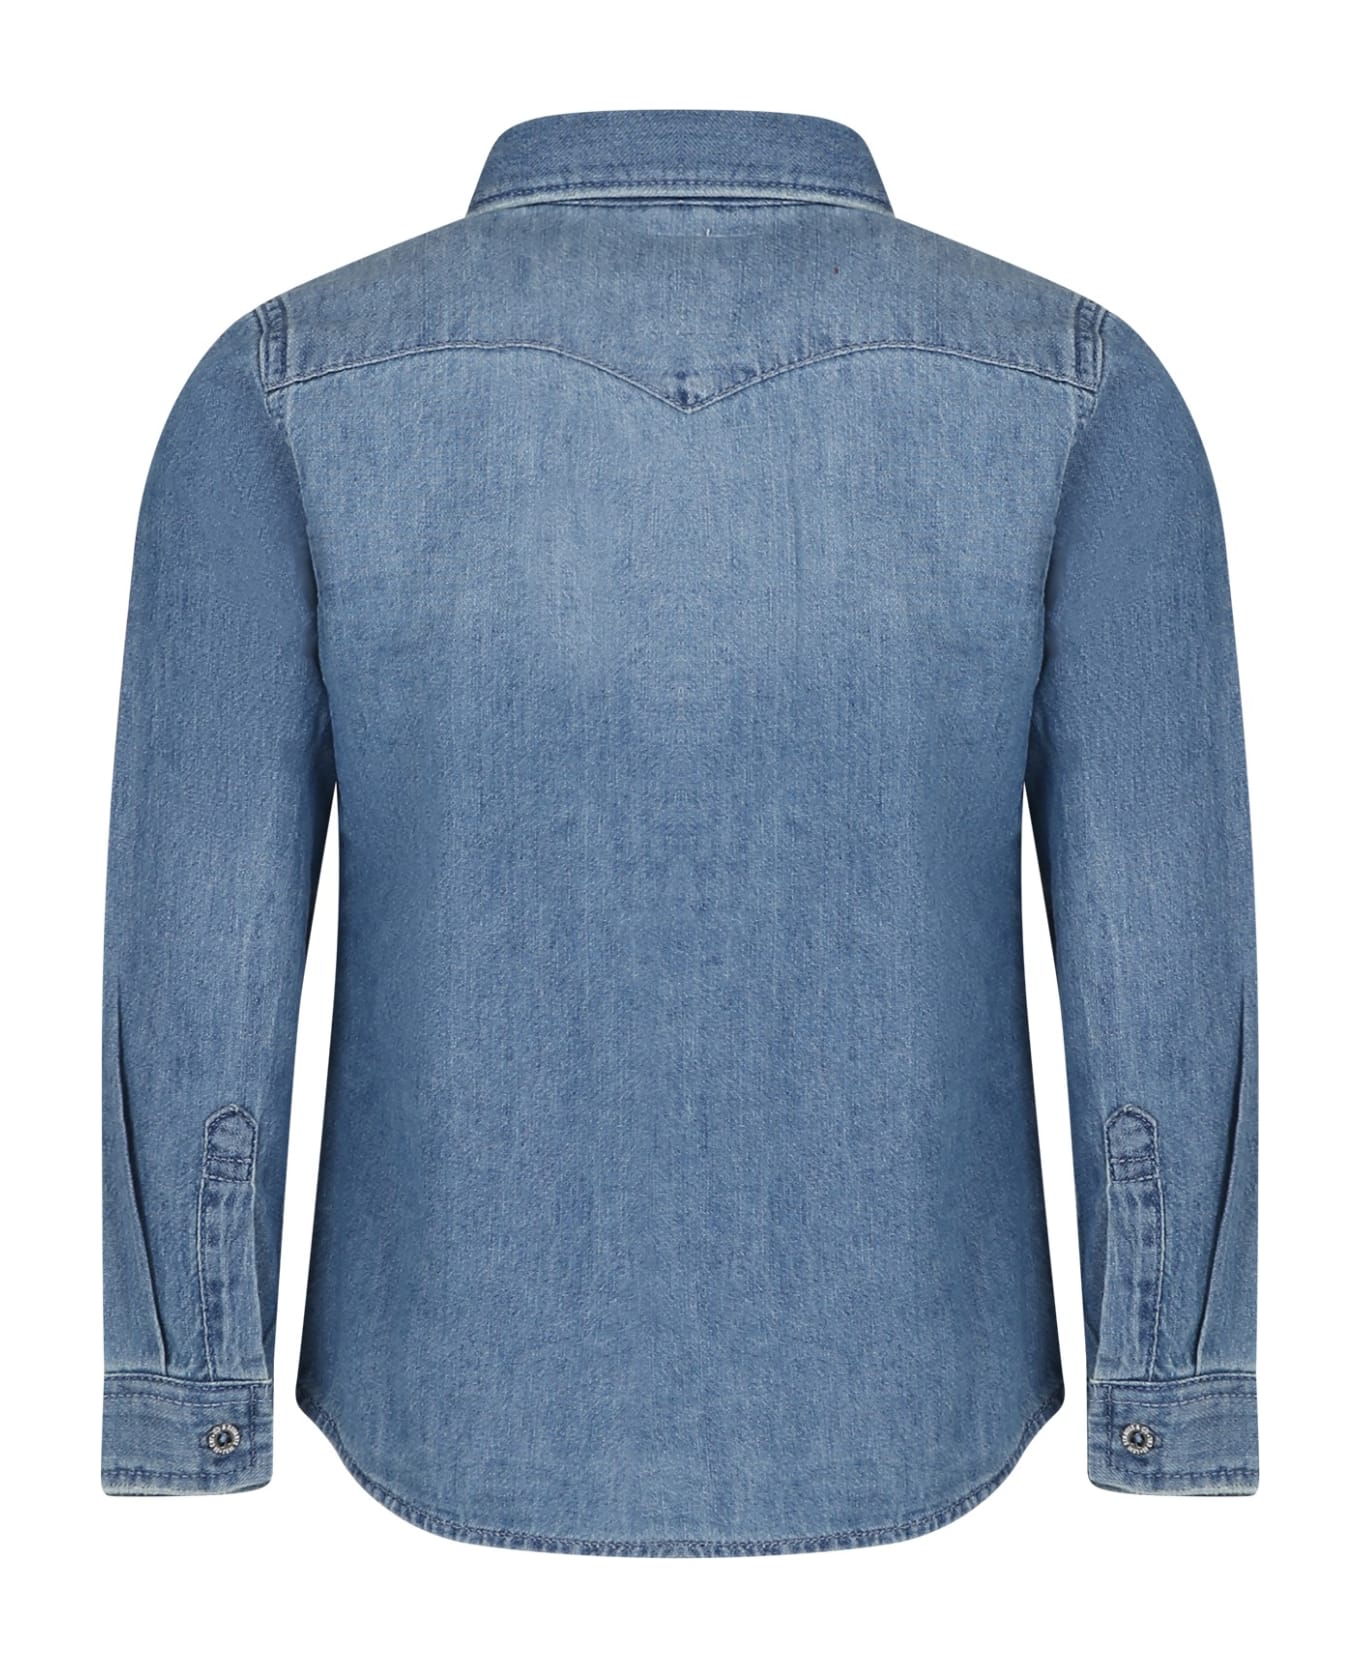 Levi's Blue Shirt For Boy With Logo - Denim